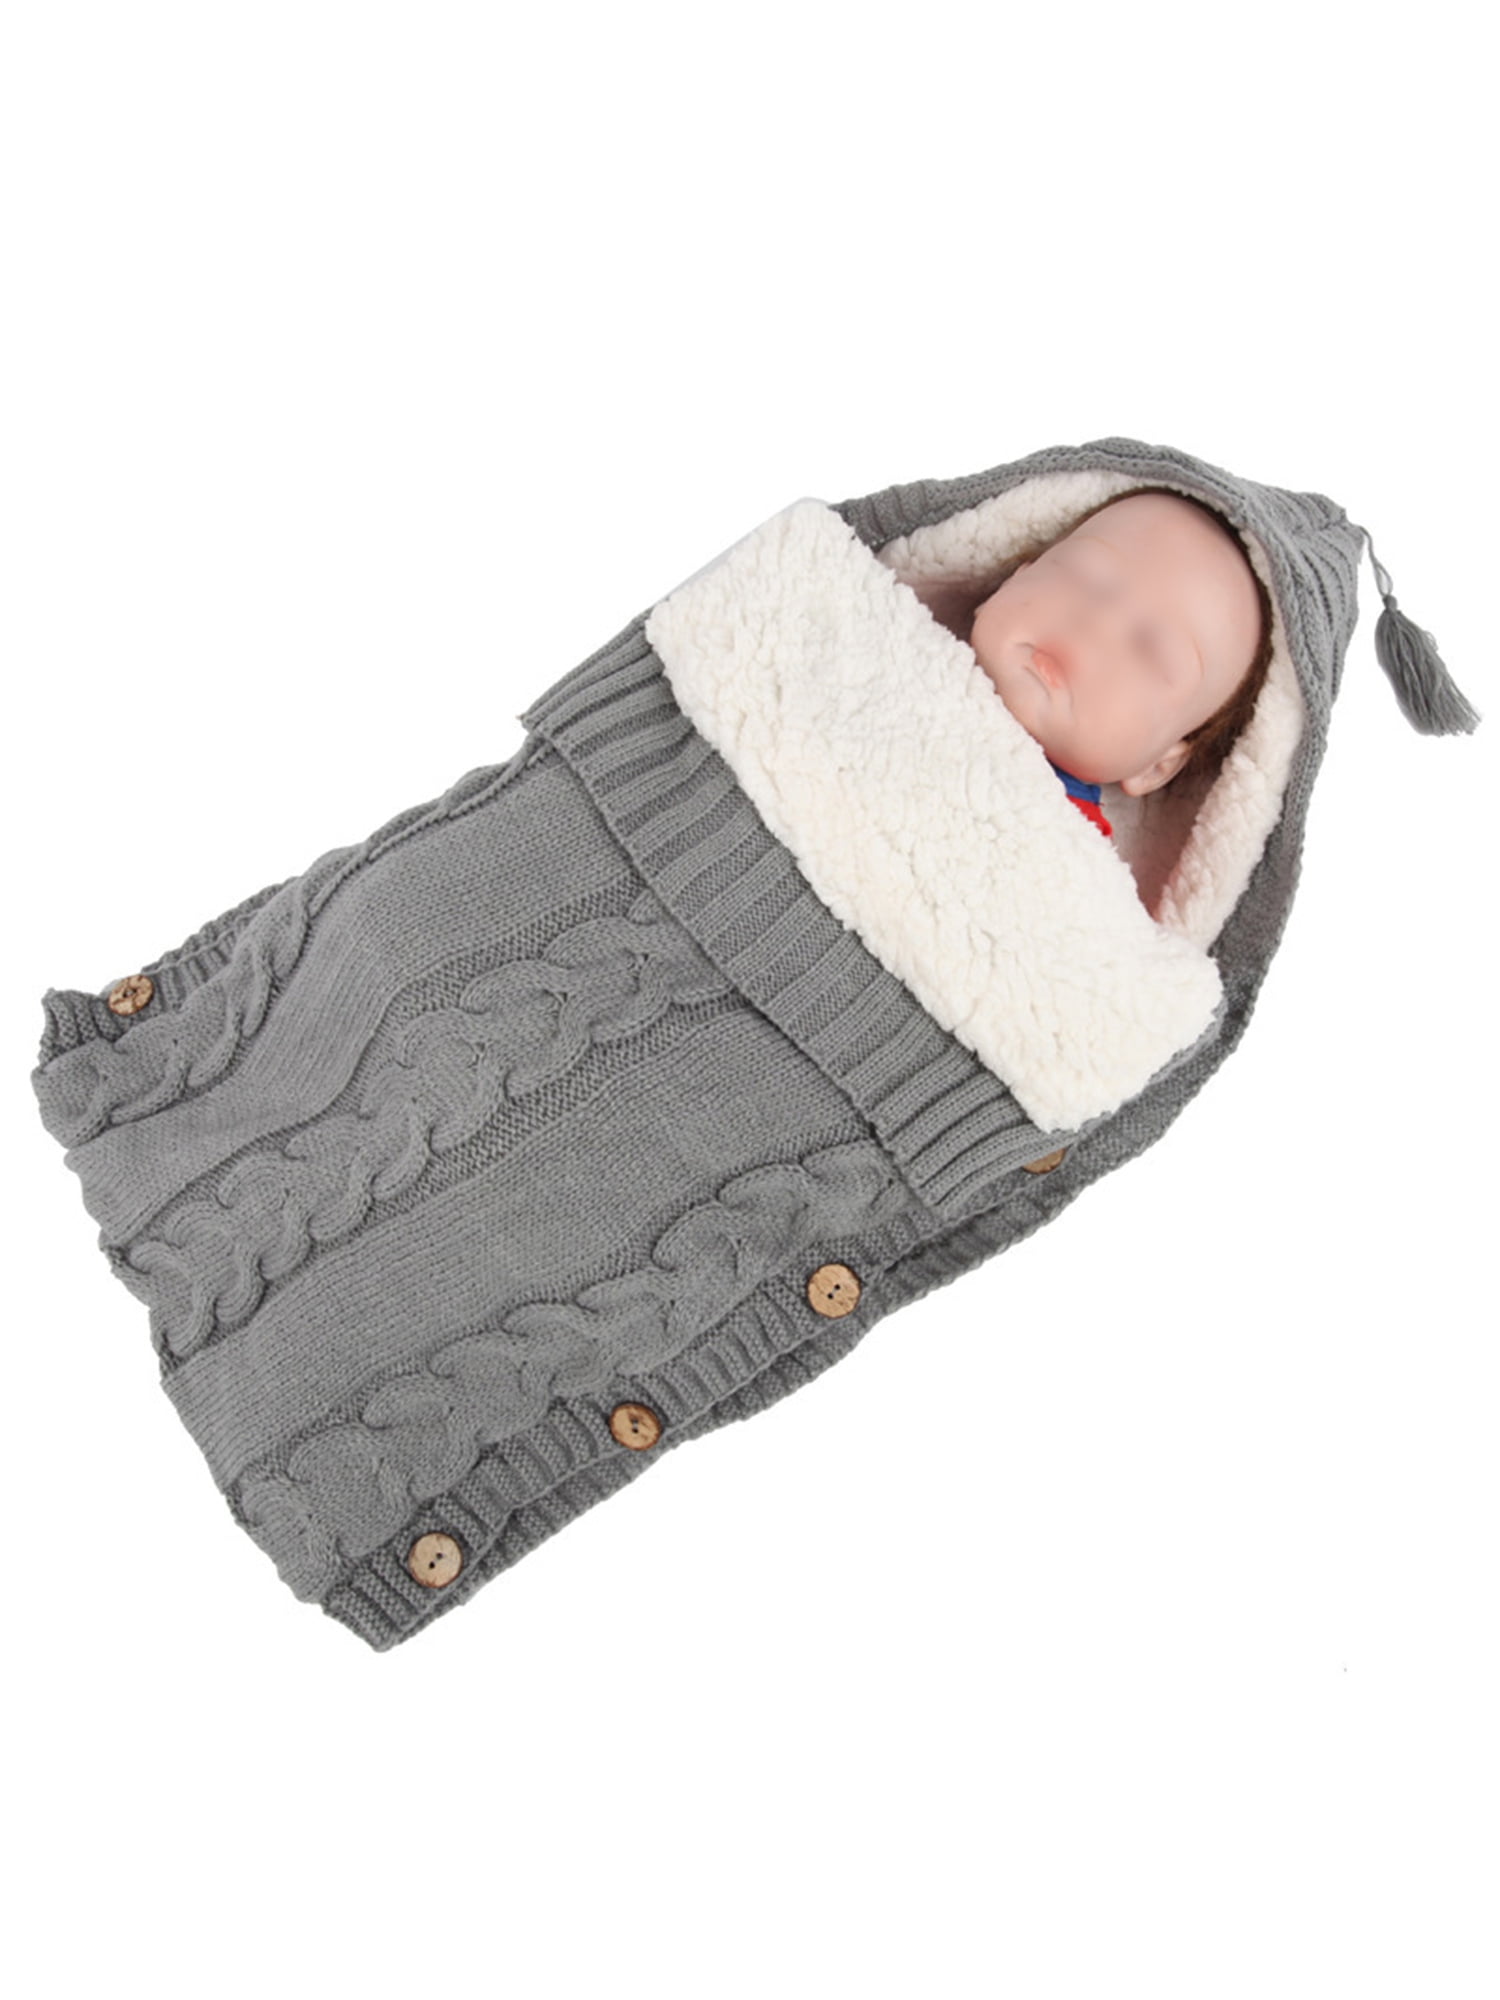 Avamo Newborn Swaddle Blankets Knit Stroller Wraps Receiving Blankets ...